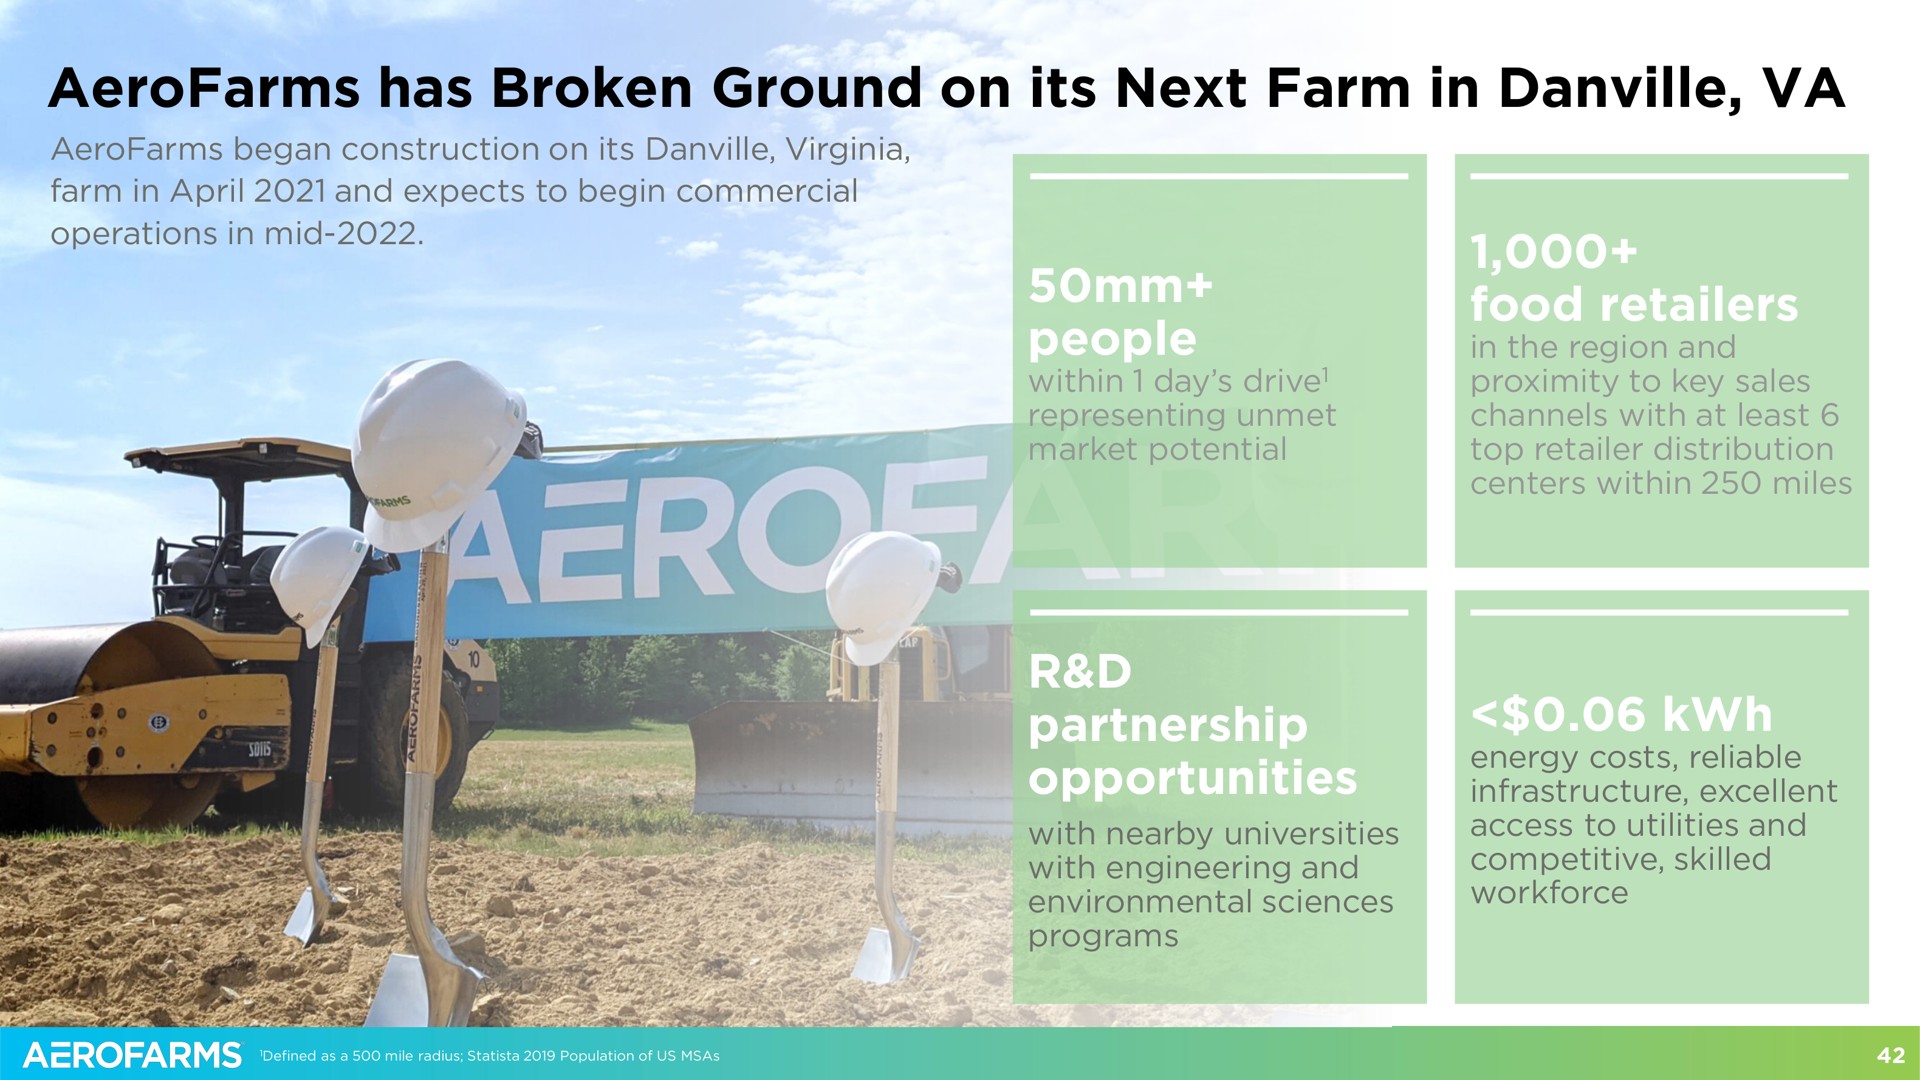 has broken ground on its next farm in people food retailers partnership opportunities | AeroFarms